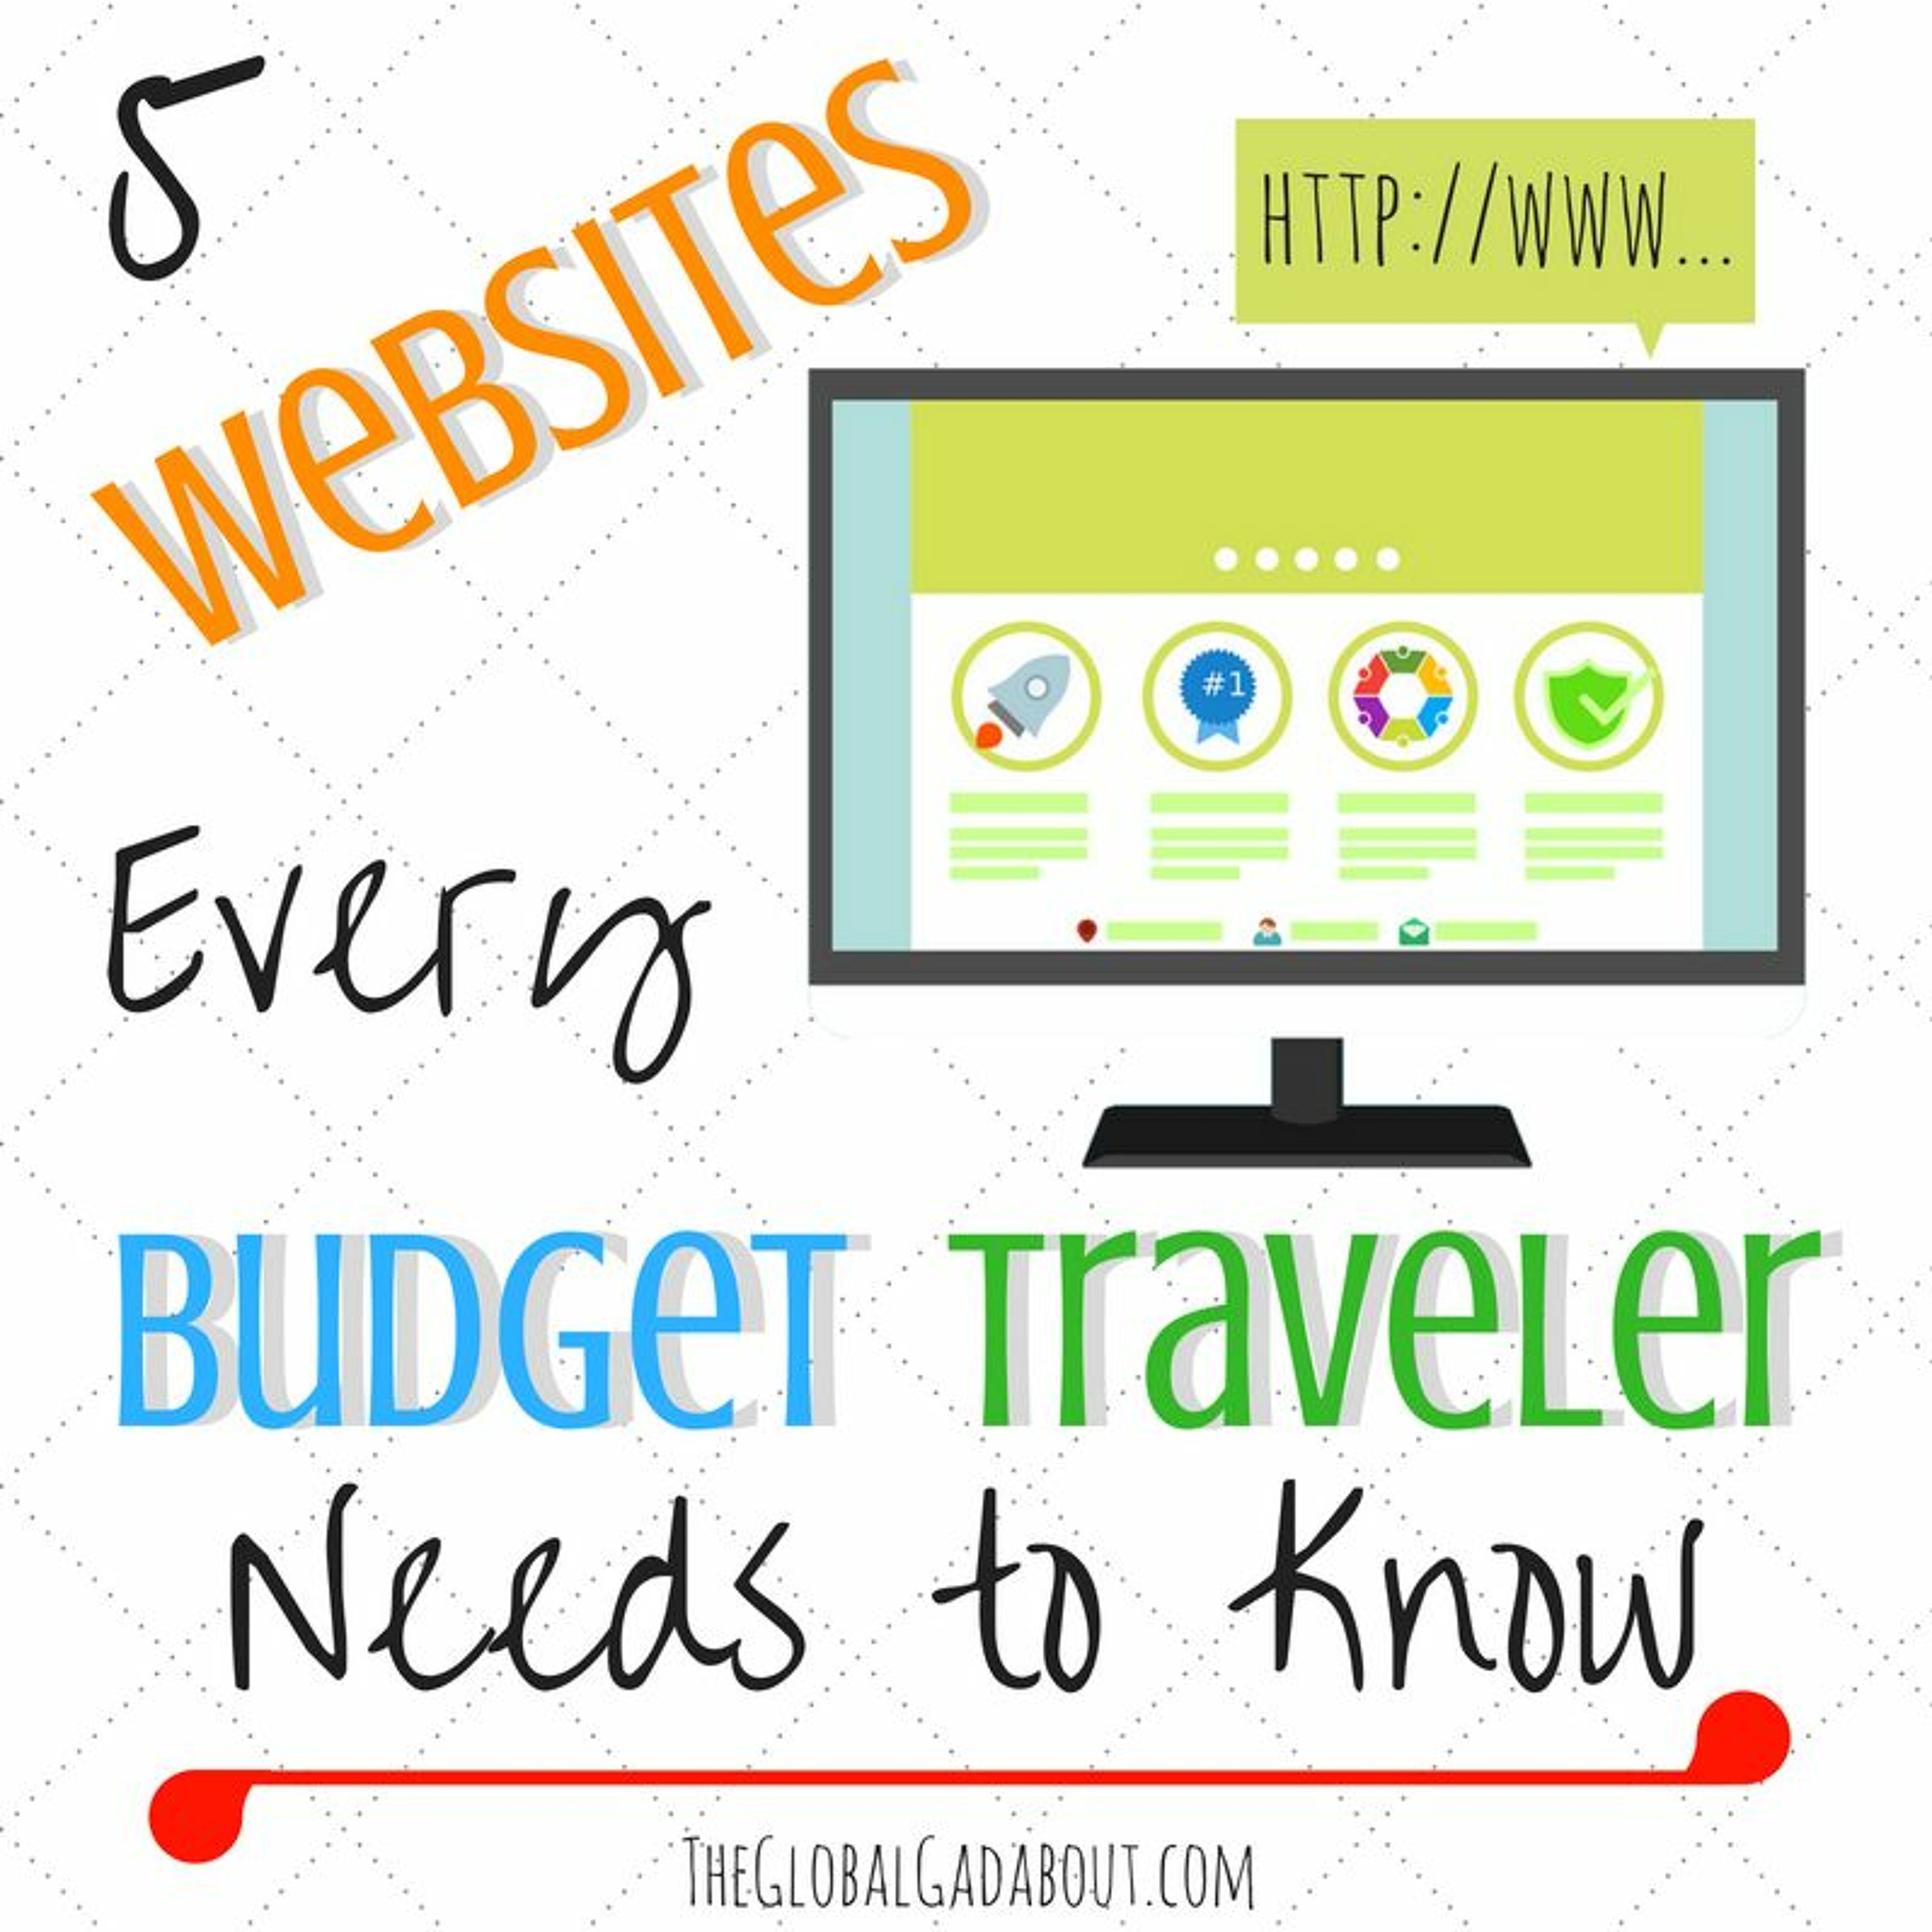 5 Websites Every Budget Traveler Needs To Know